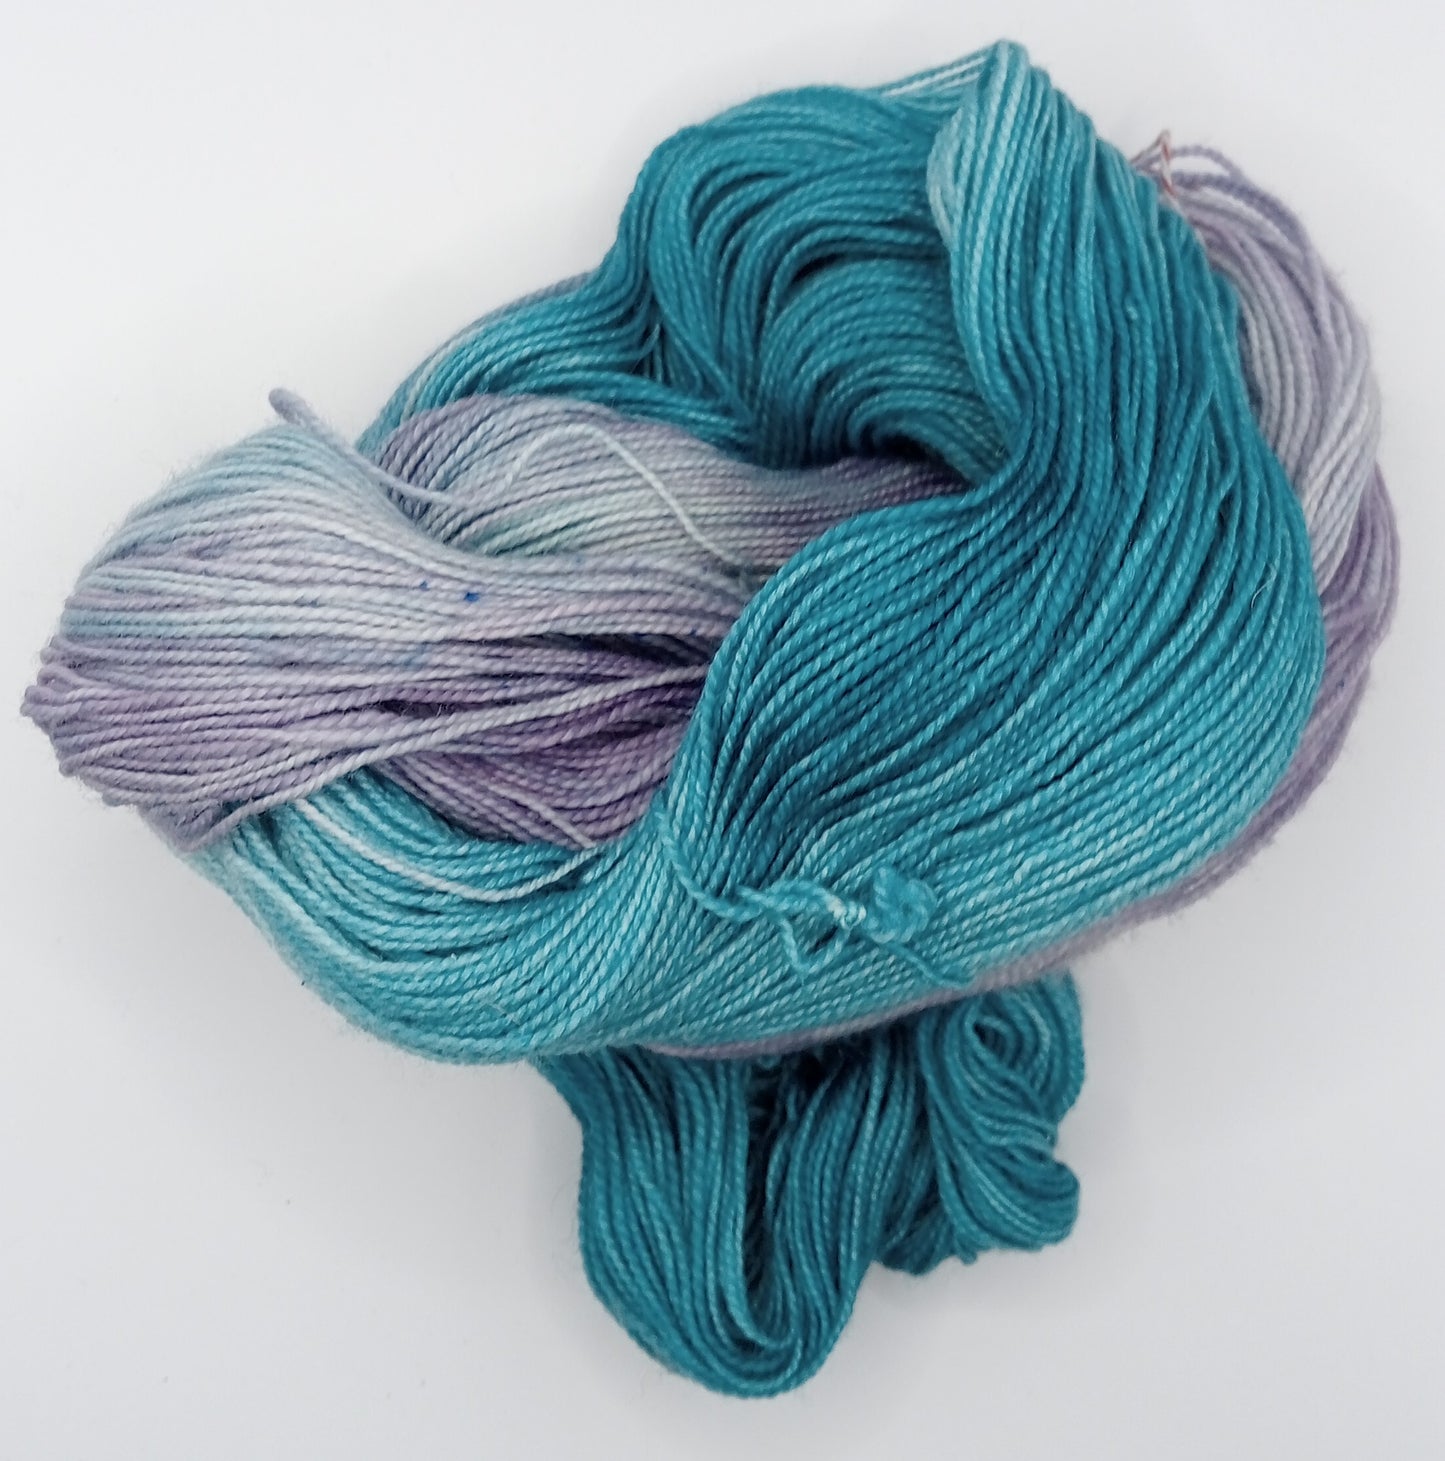 100G hand dyed Bluefaced Leicester/Nylon High Twist sock yarn - "Aurora Reef"